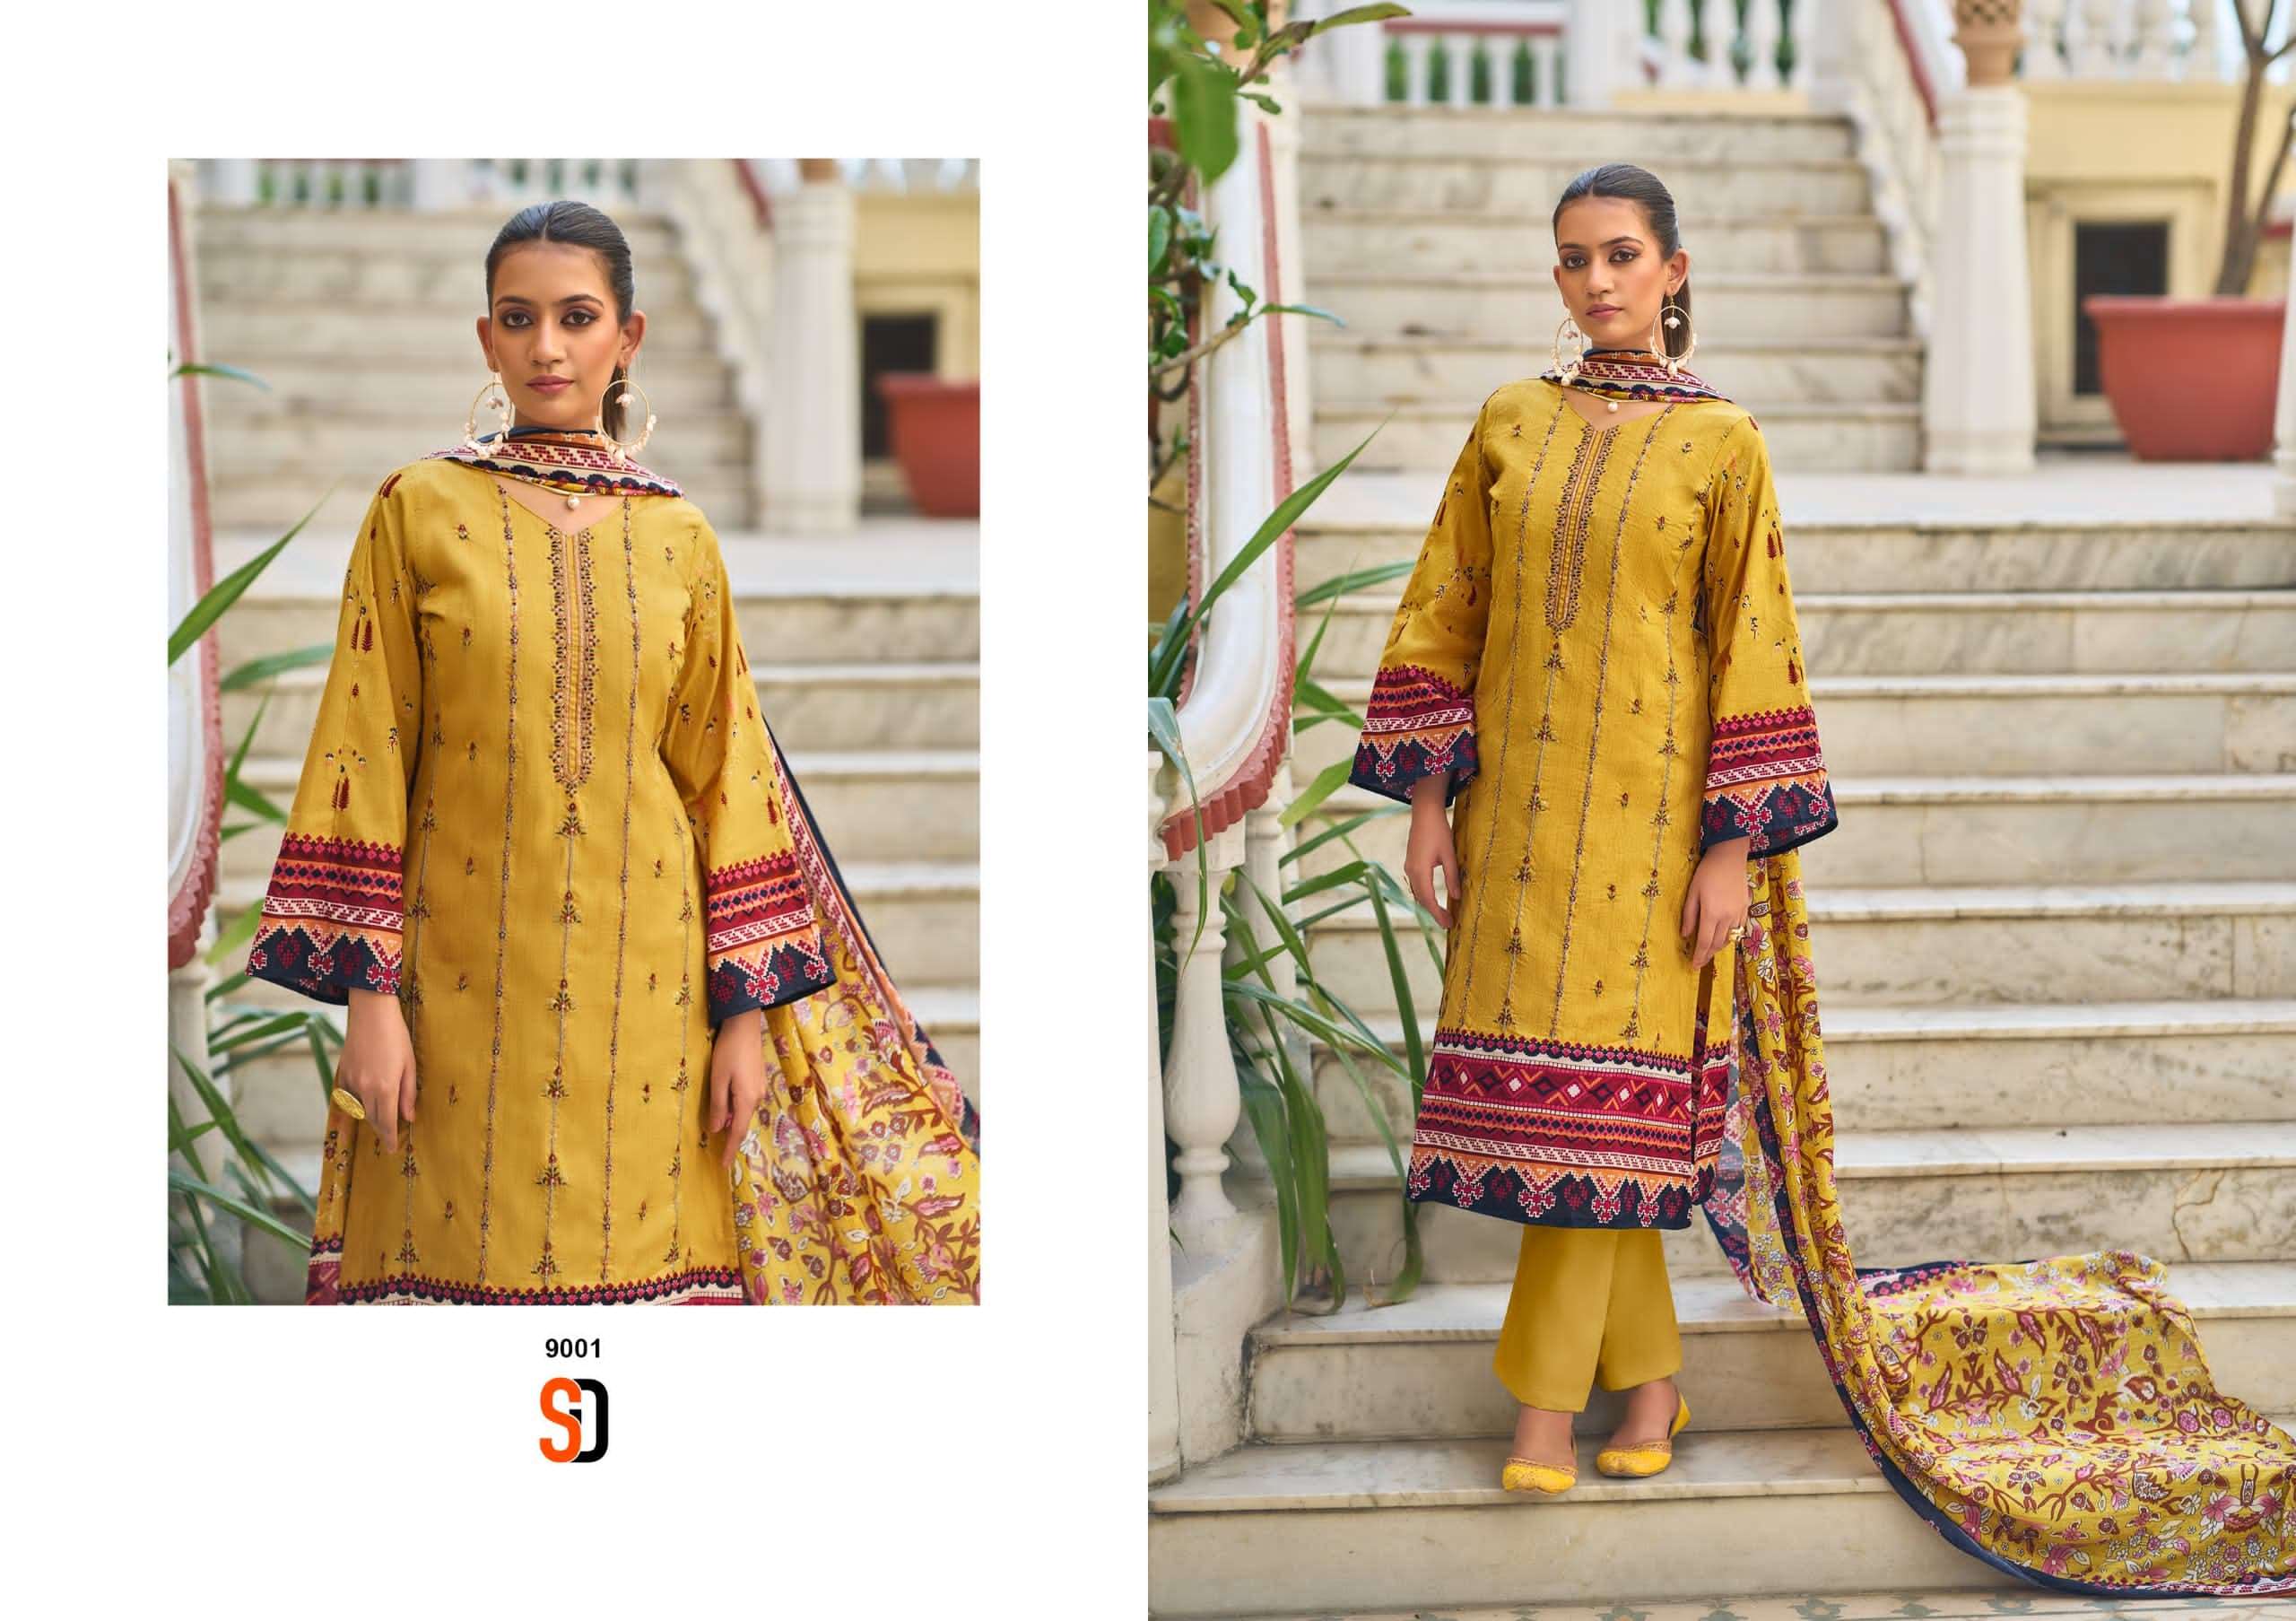 Shraddha Bin Saeed Lawn Collection Vol 9 Pakistani Suit Wholesale catalog